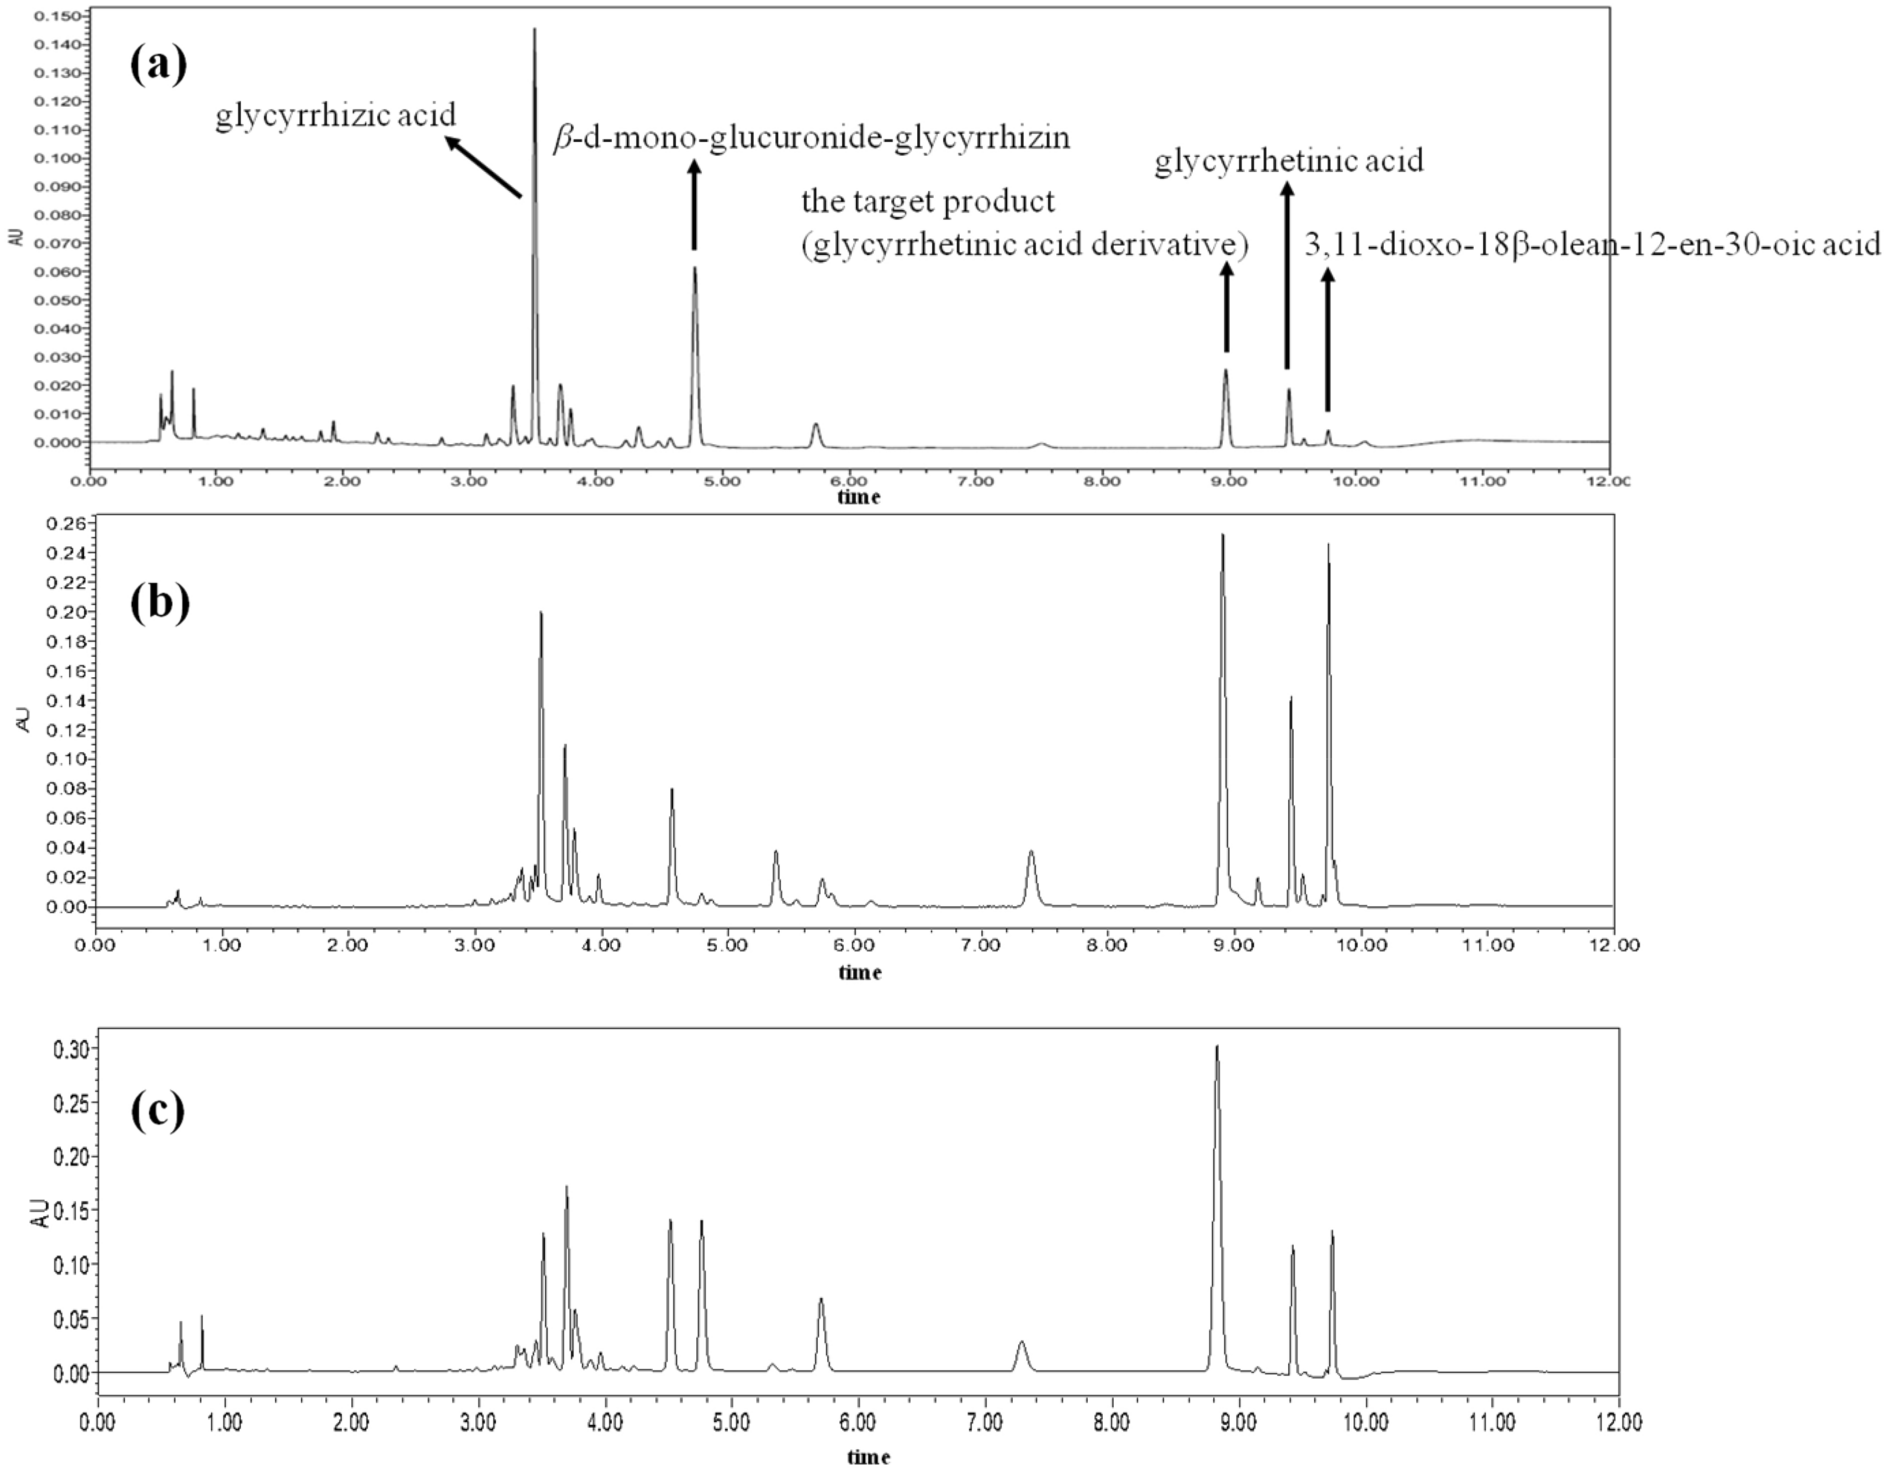 Biosynthesis of Chryseno[2,1,c]oxepin-12-Carboxylic Acid from Glycyrrhizic Acid in Aspergillus terreus TMZ05-2, and Analysis of Its Anti-inflammatory Activity